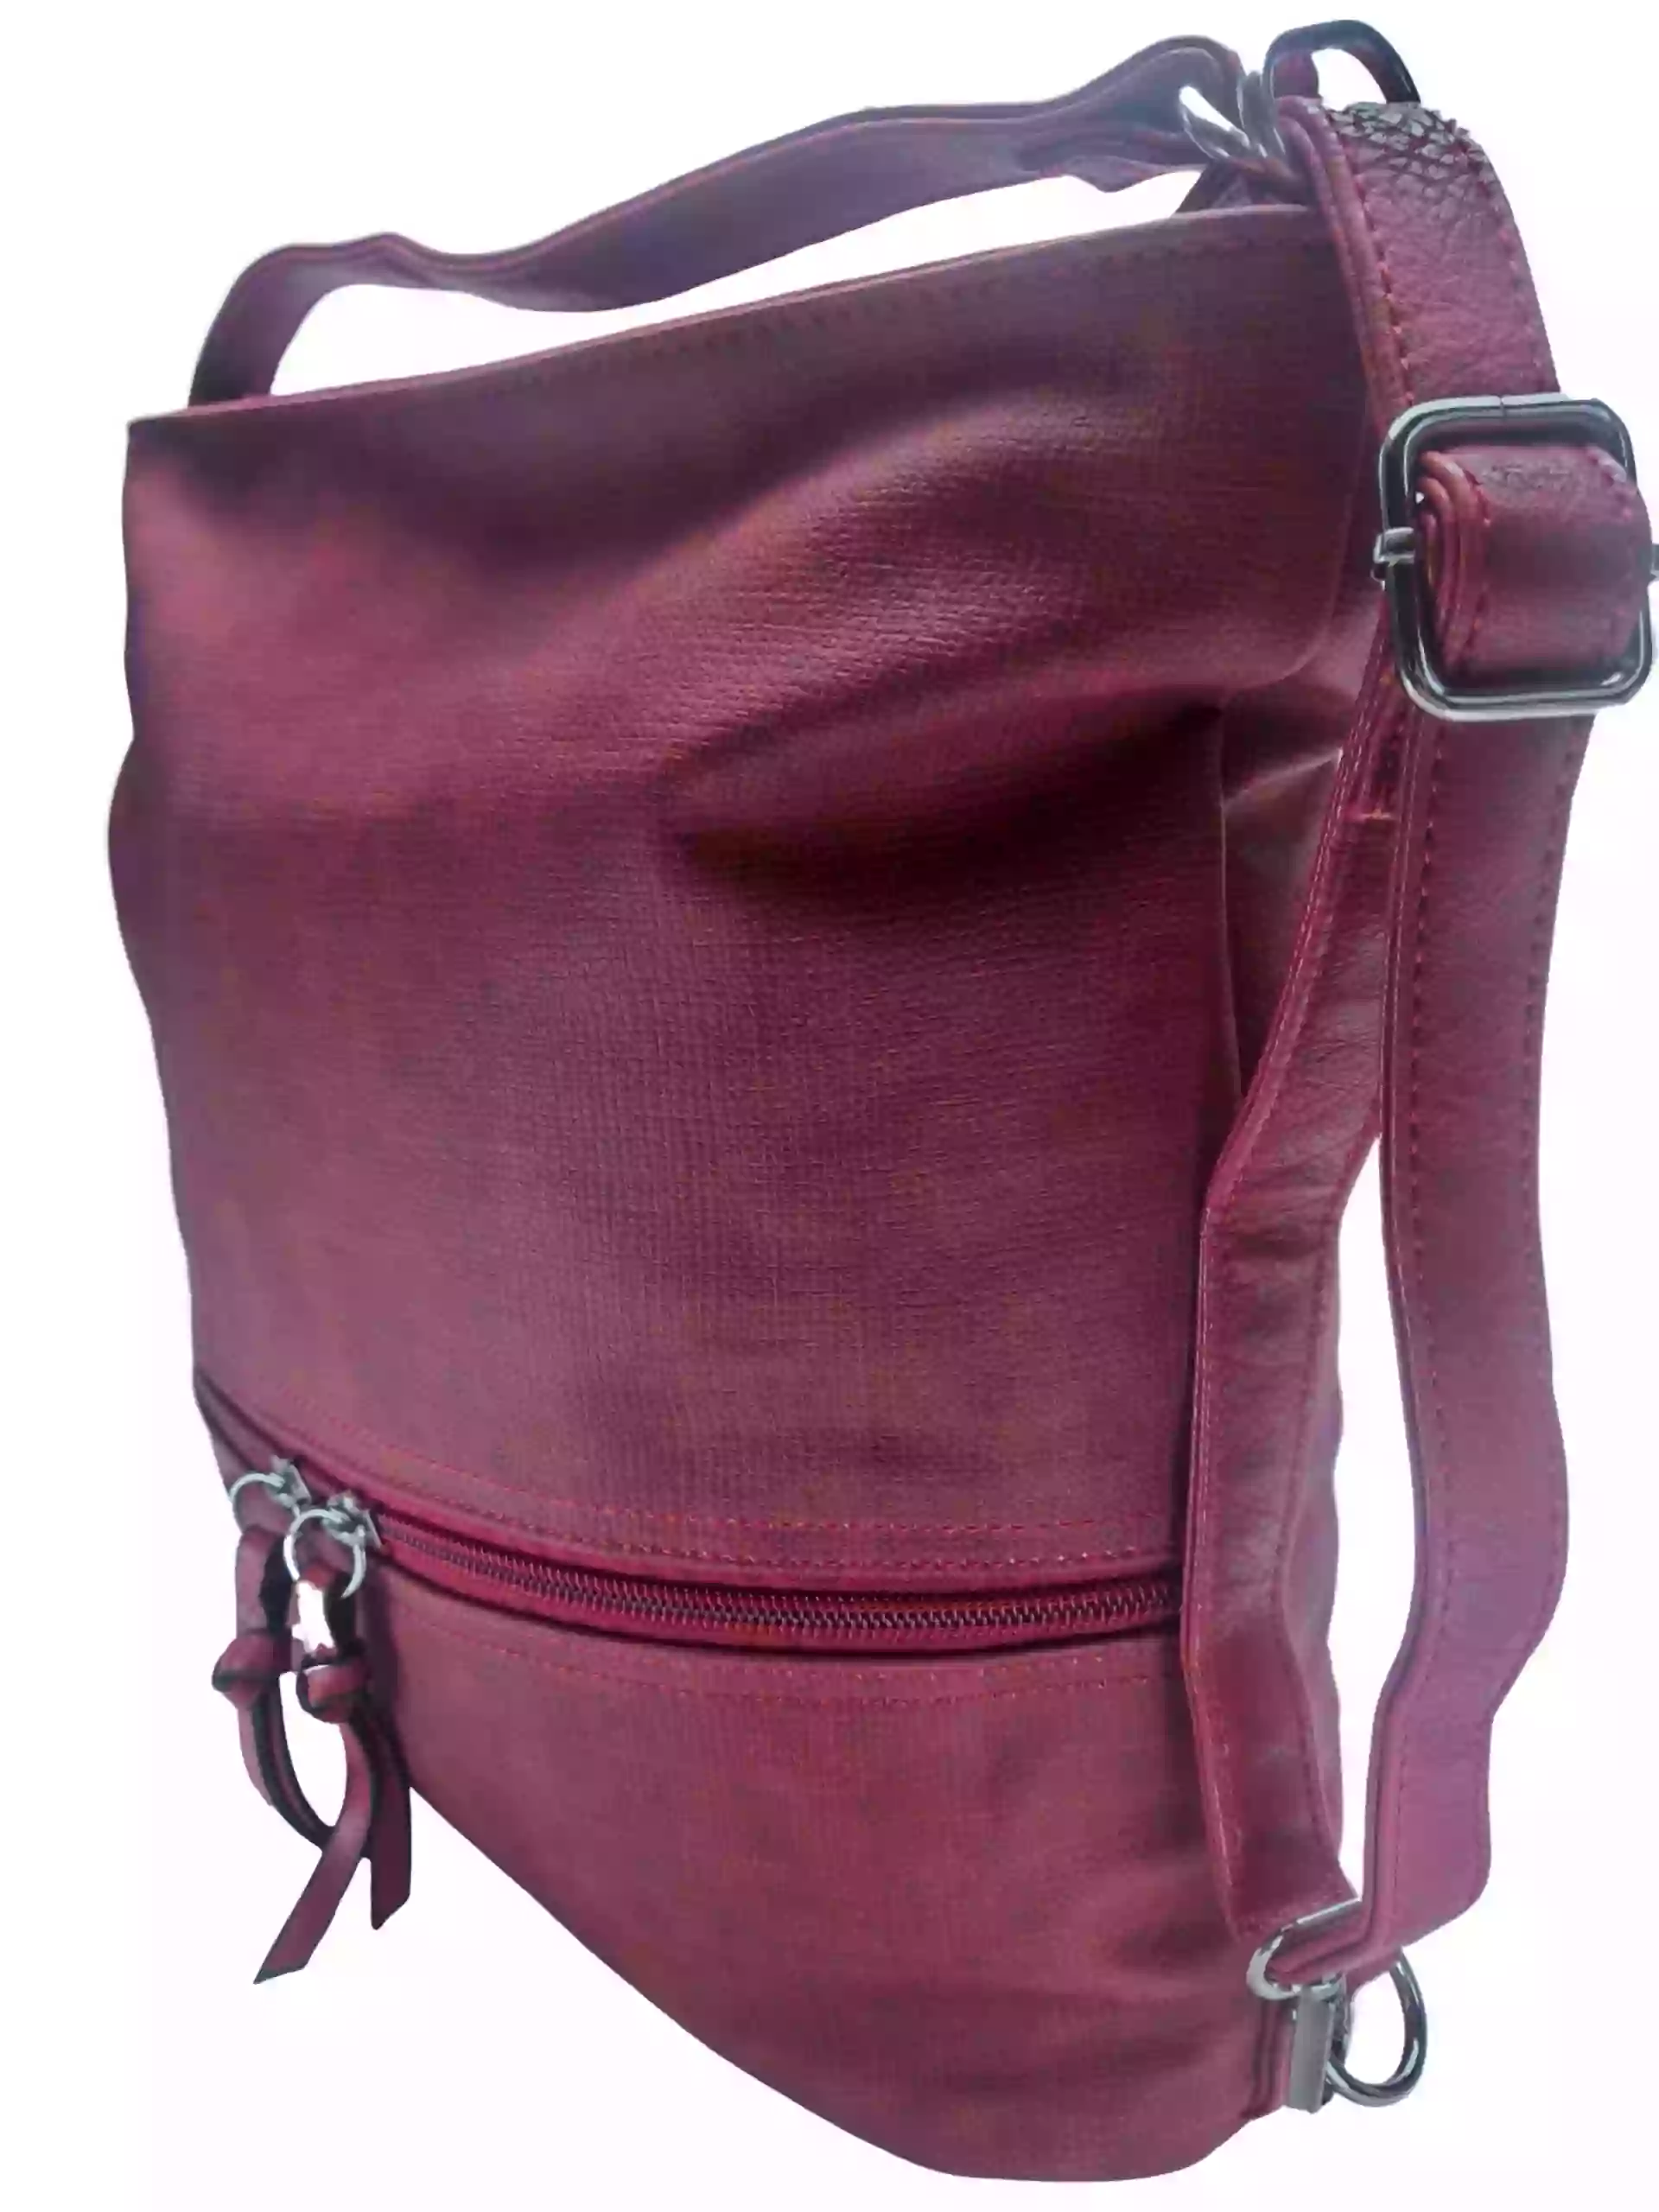 Kabelko-batoh střední velikosti se slušivou texturou, Tapple H18009-1, bordó, detail kabelko-batohu